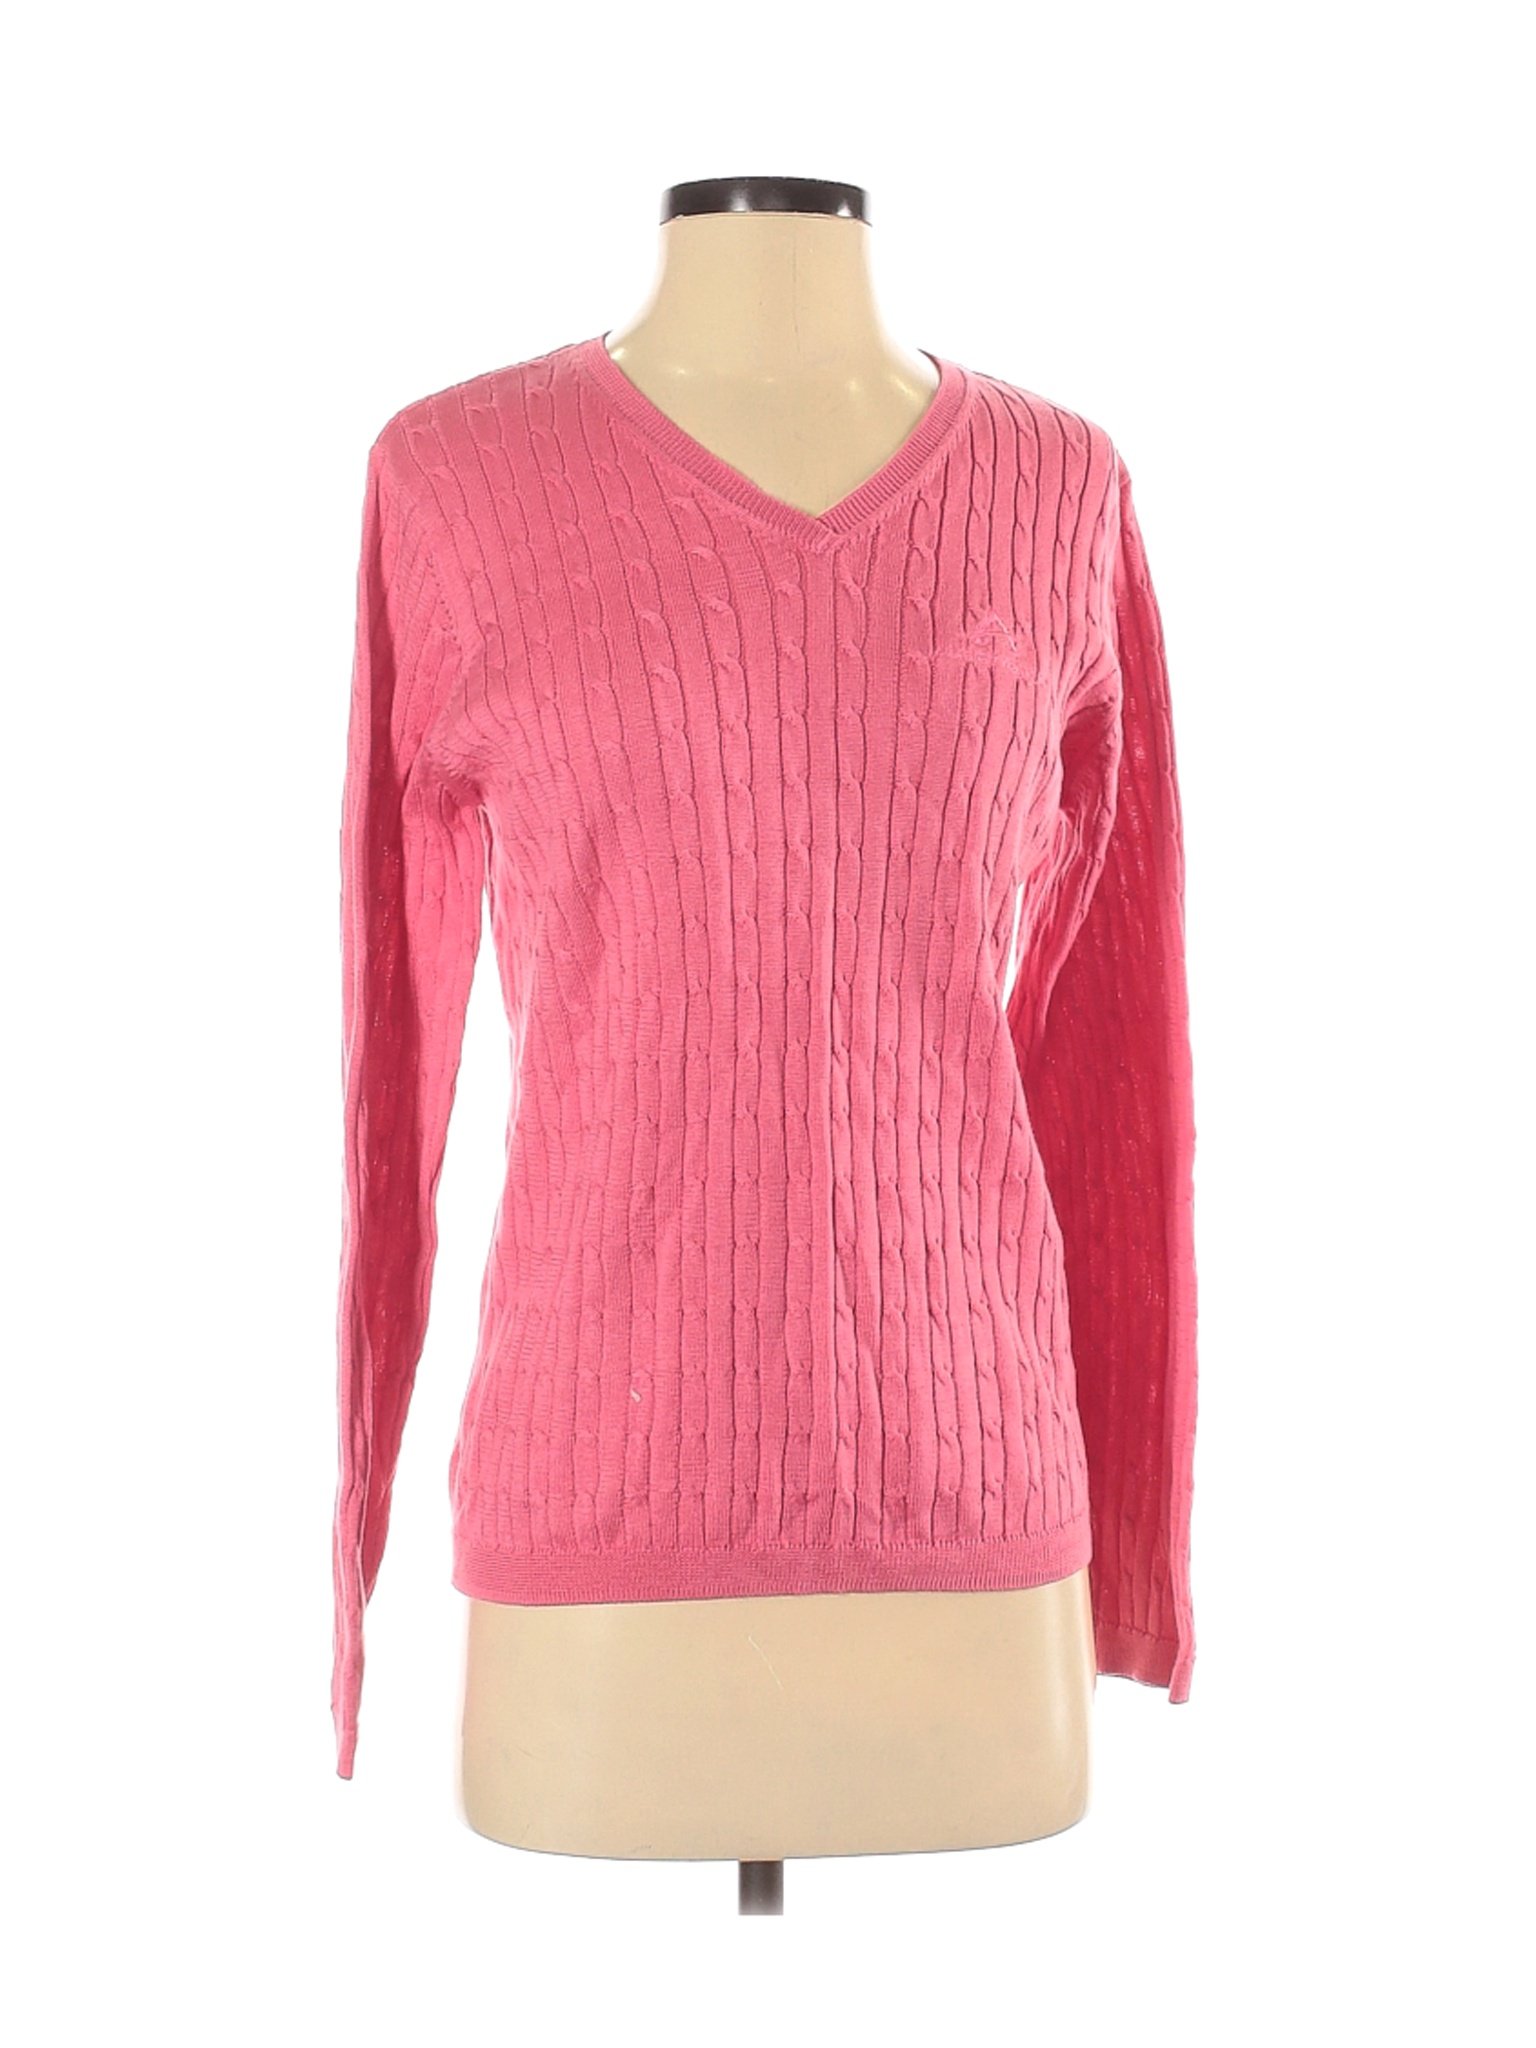 IZOD Women Pink Pullover Sweater S | eBay